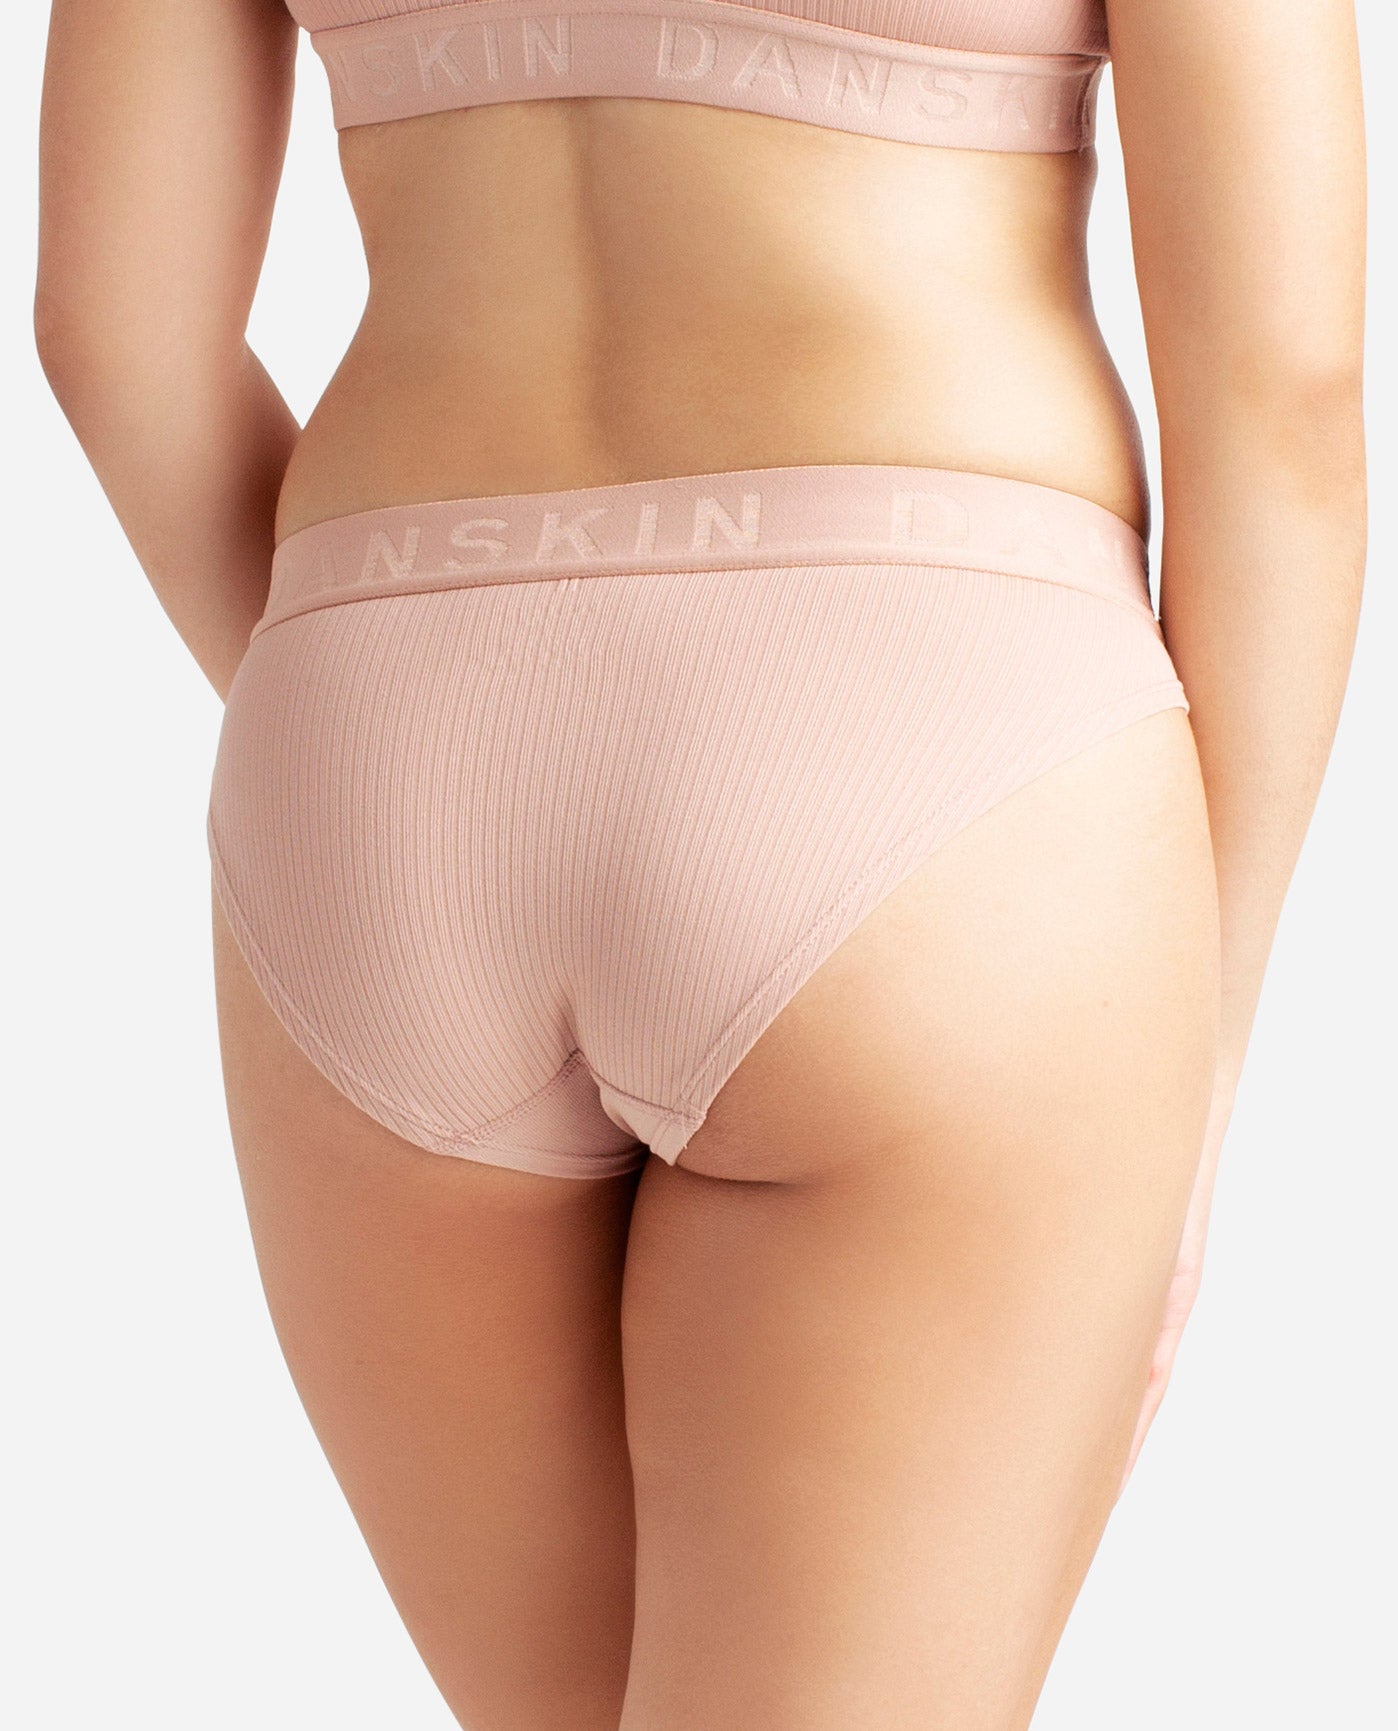 Danskin Ribbed Panties - 5-Pack, Organic Cotton, Bikini Briefs - Save 68%